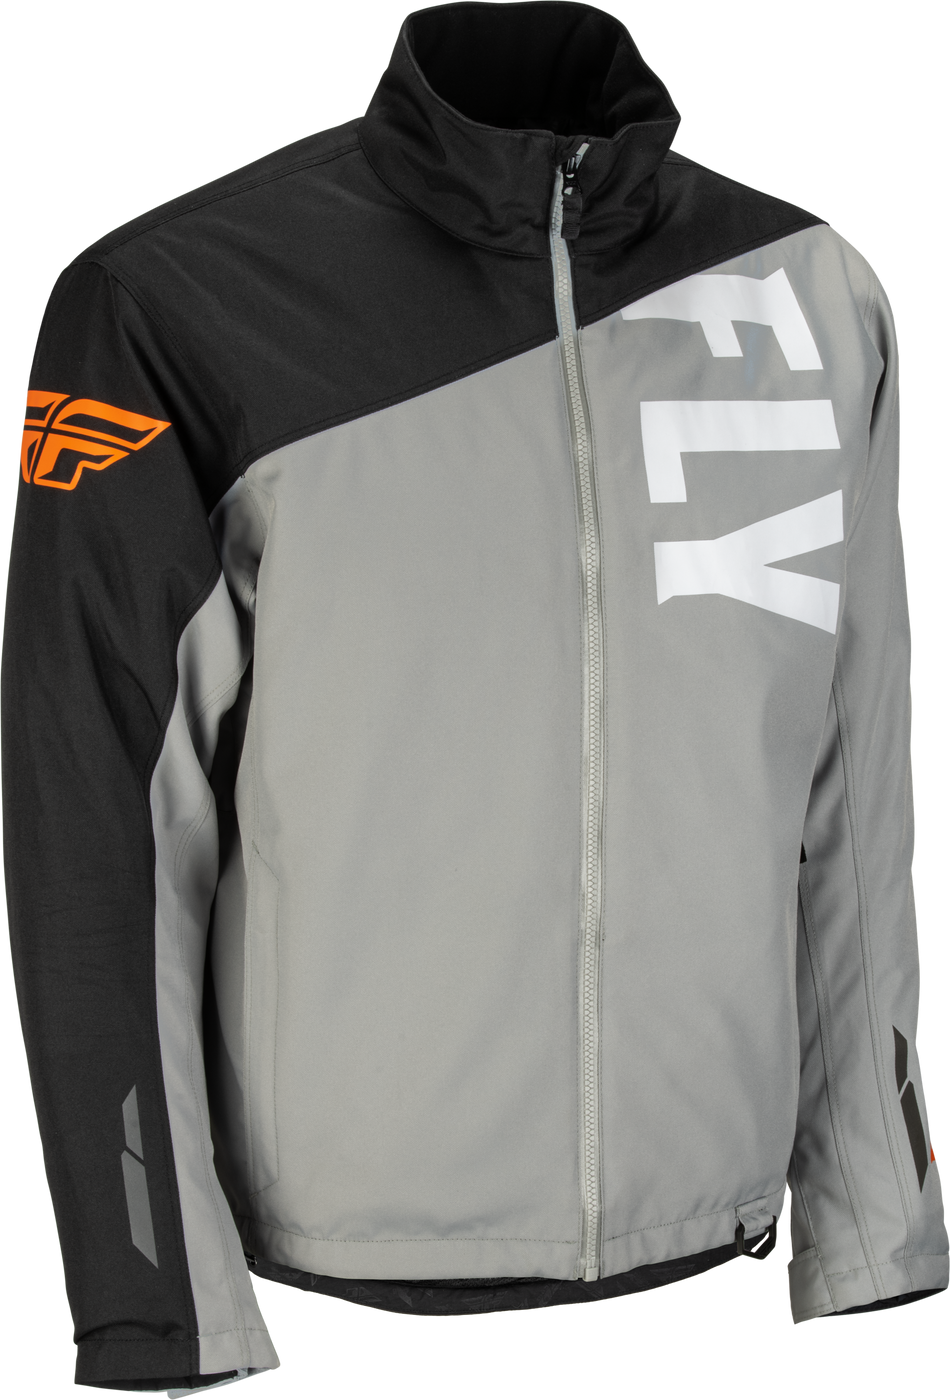 FLY RACING Aurora Jacket Grey/Black/Orange Xl 470-4123X